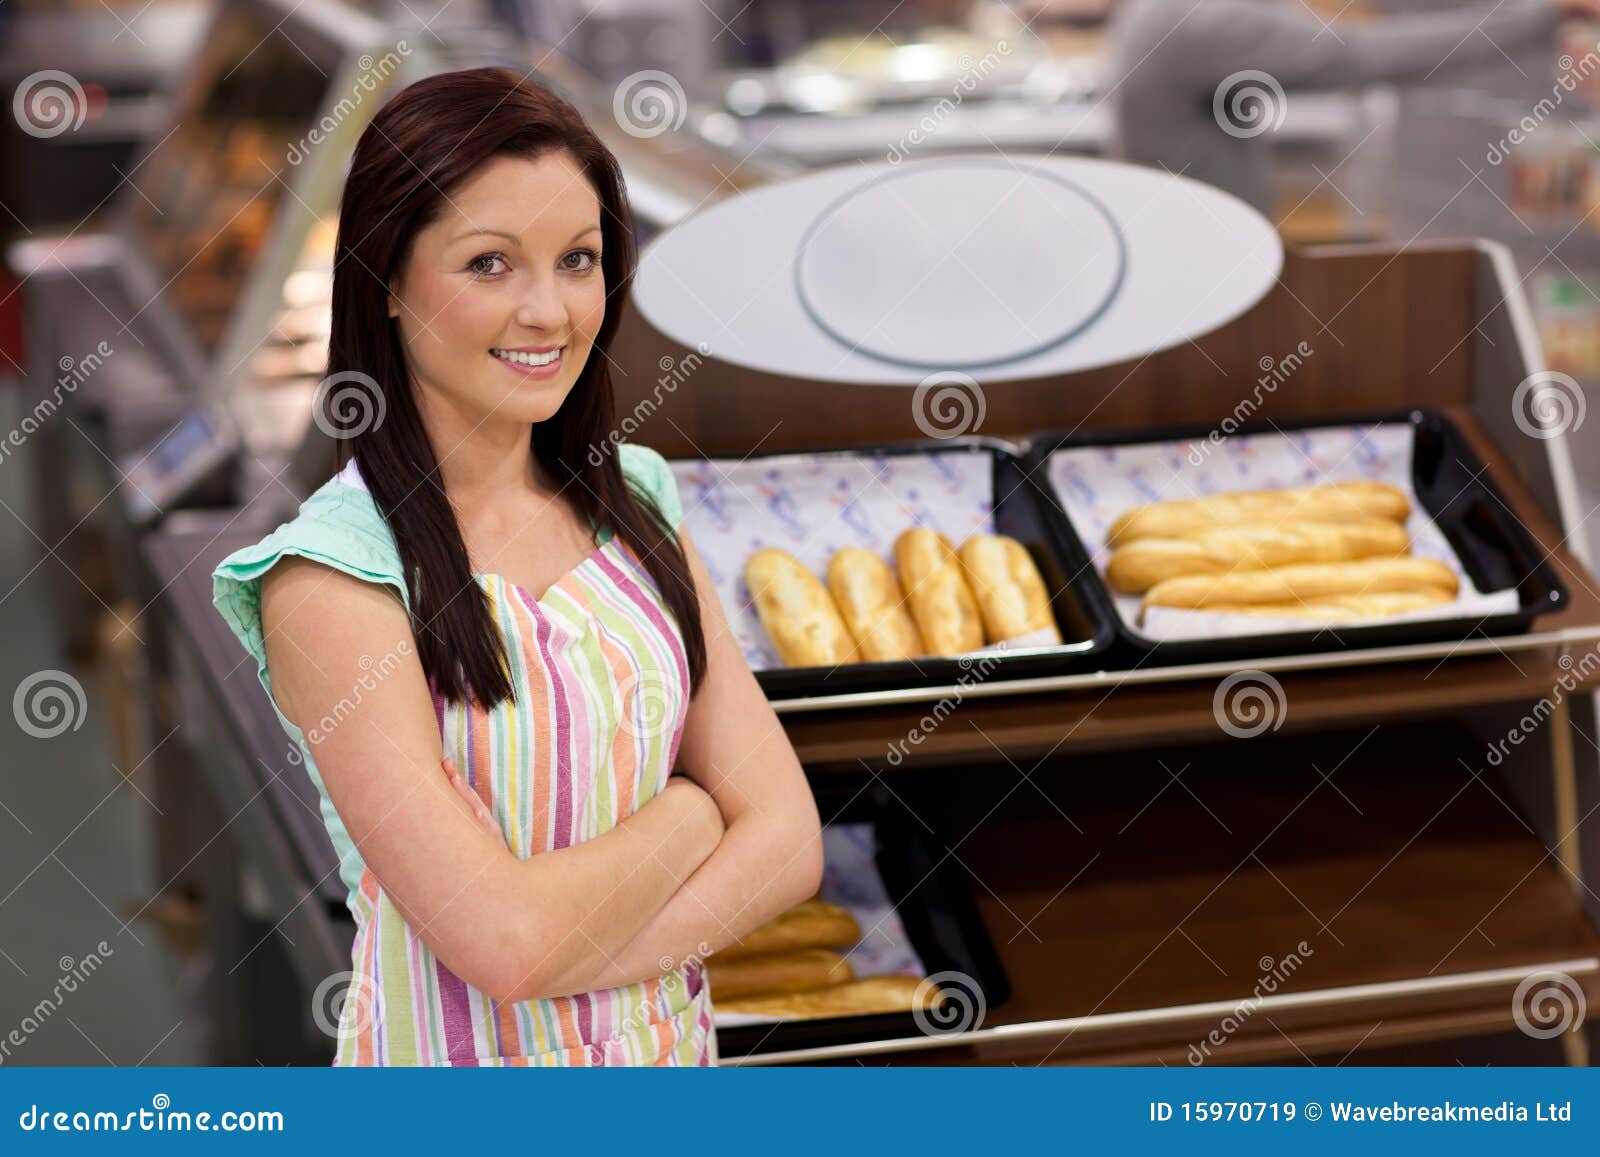 self-assured female cook smiling at the camera